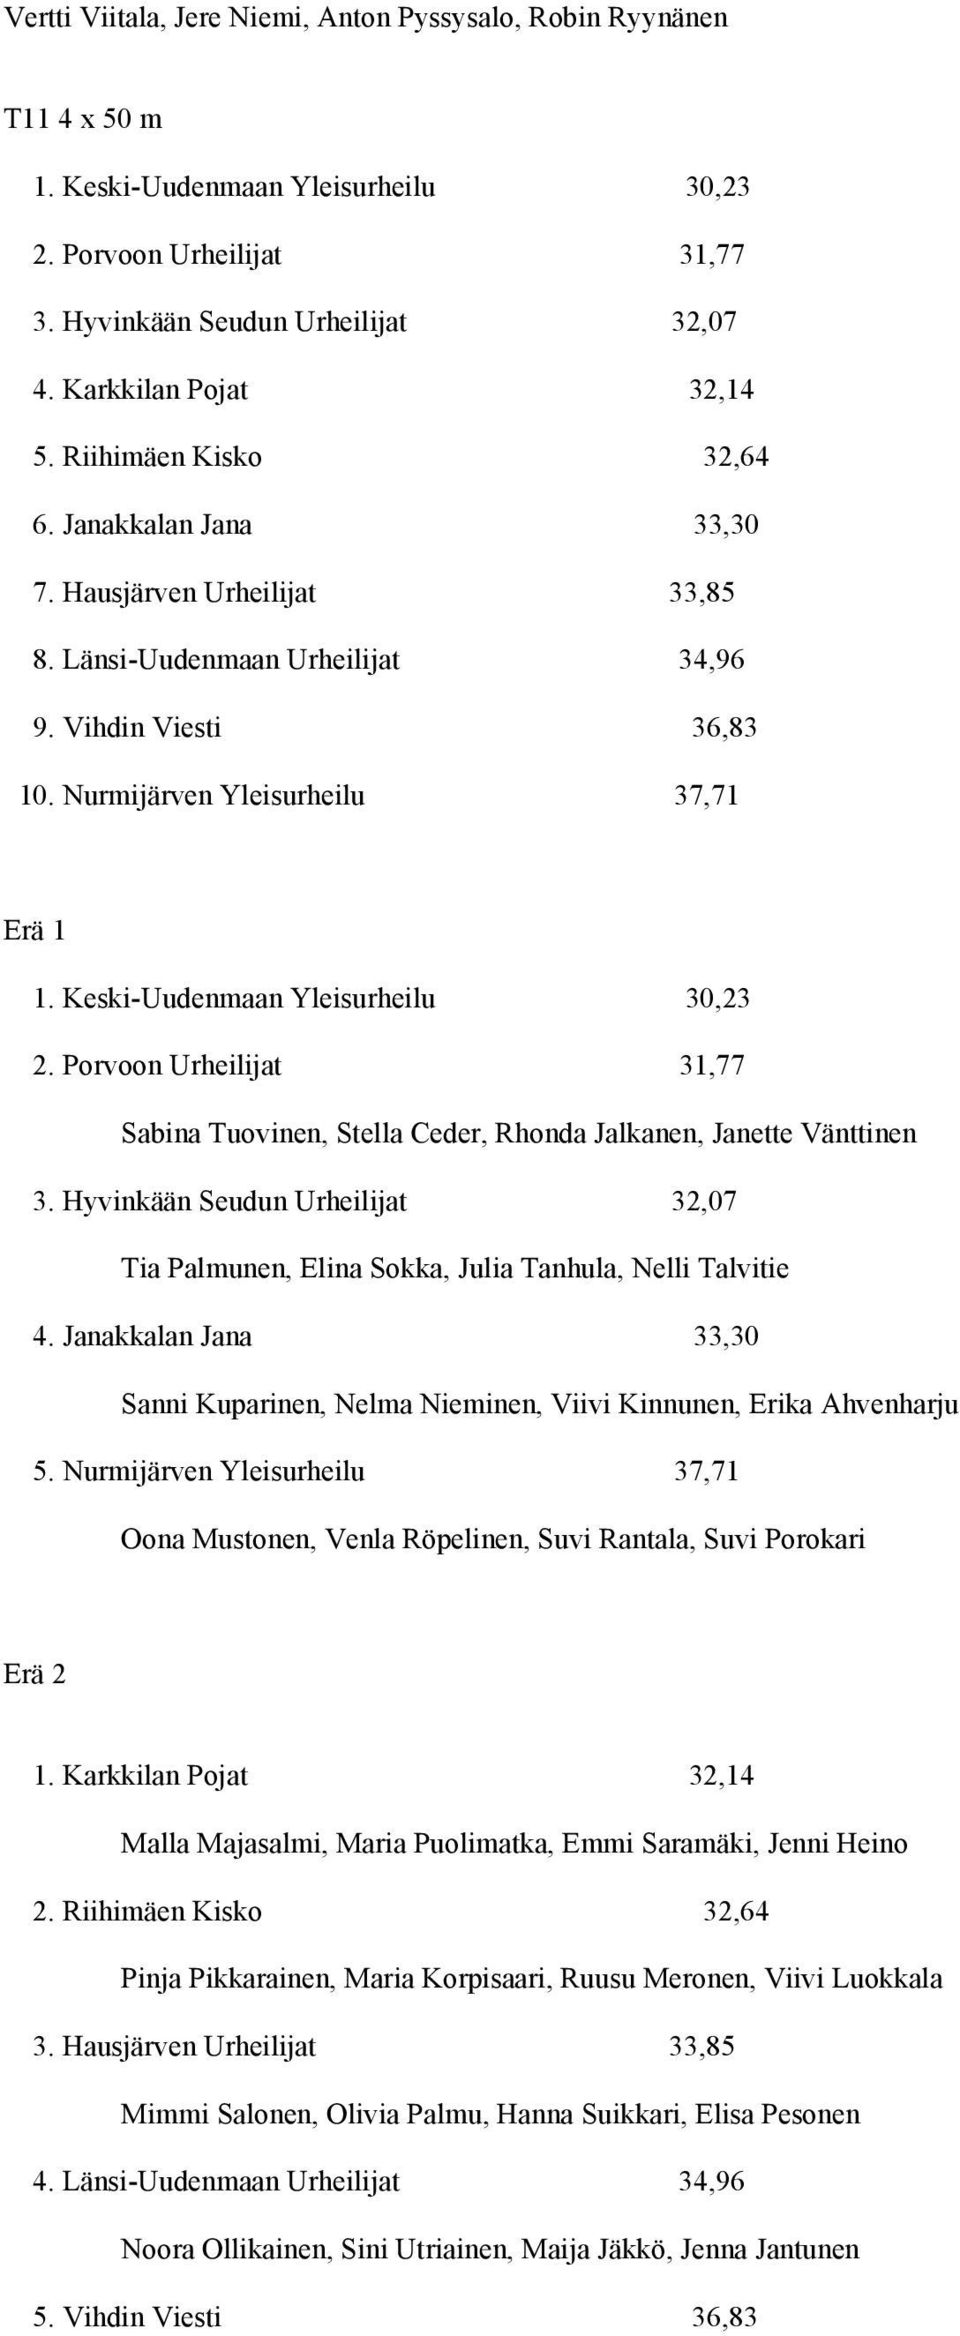 Keski-Uudenmaan Yleisurheilu 30,23 2. Porvoon Urheilijat 31,77 Sabina Tuovinen, Stella Ceder, Rhonda Jalkanen, Janette Vänttinen 3.